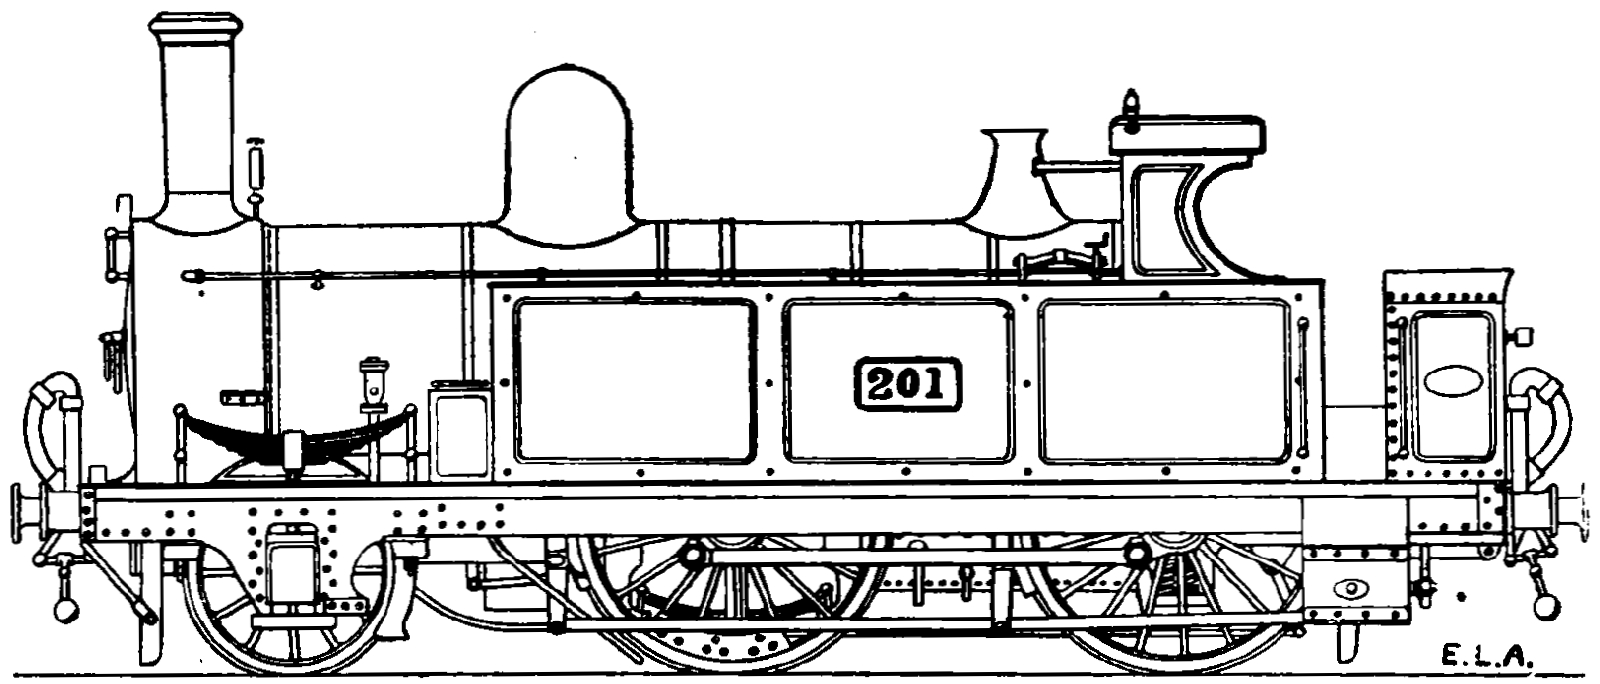 No. 201 after rebuild to a tank locomotive